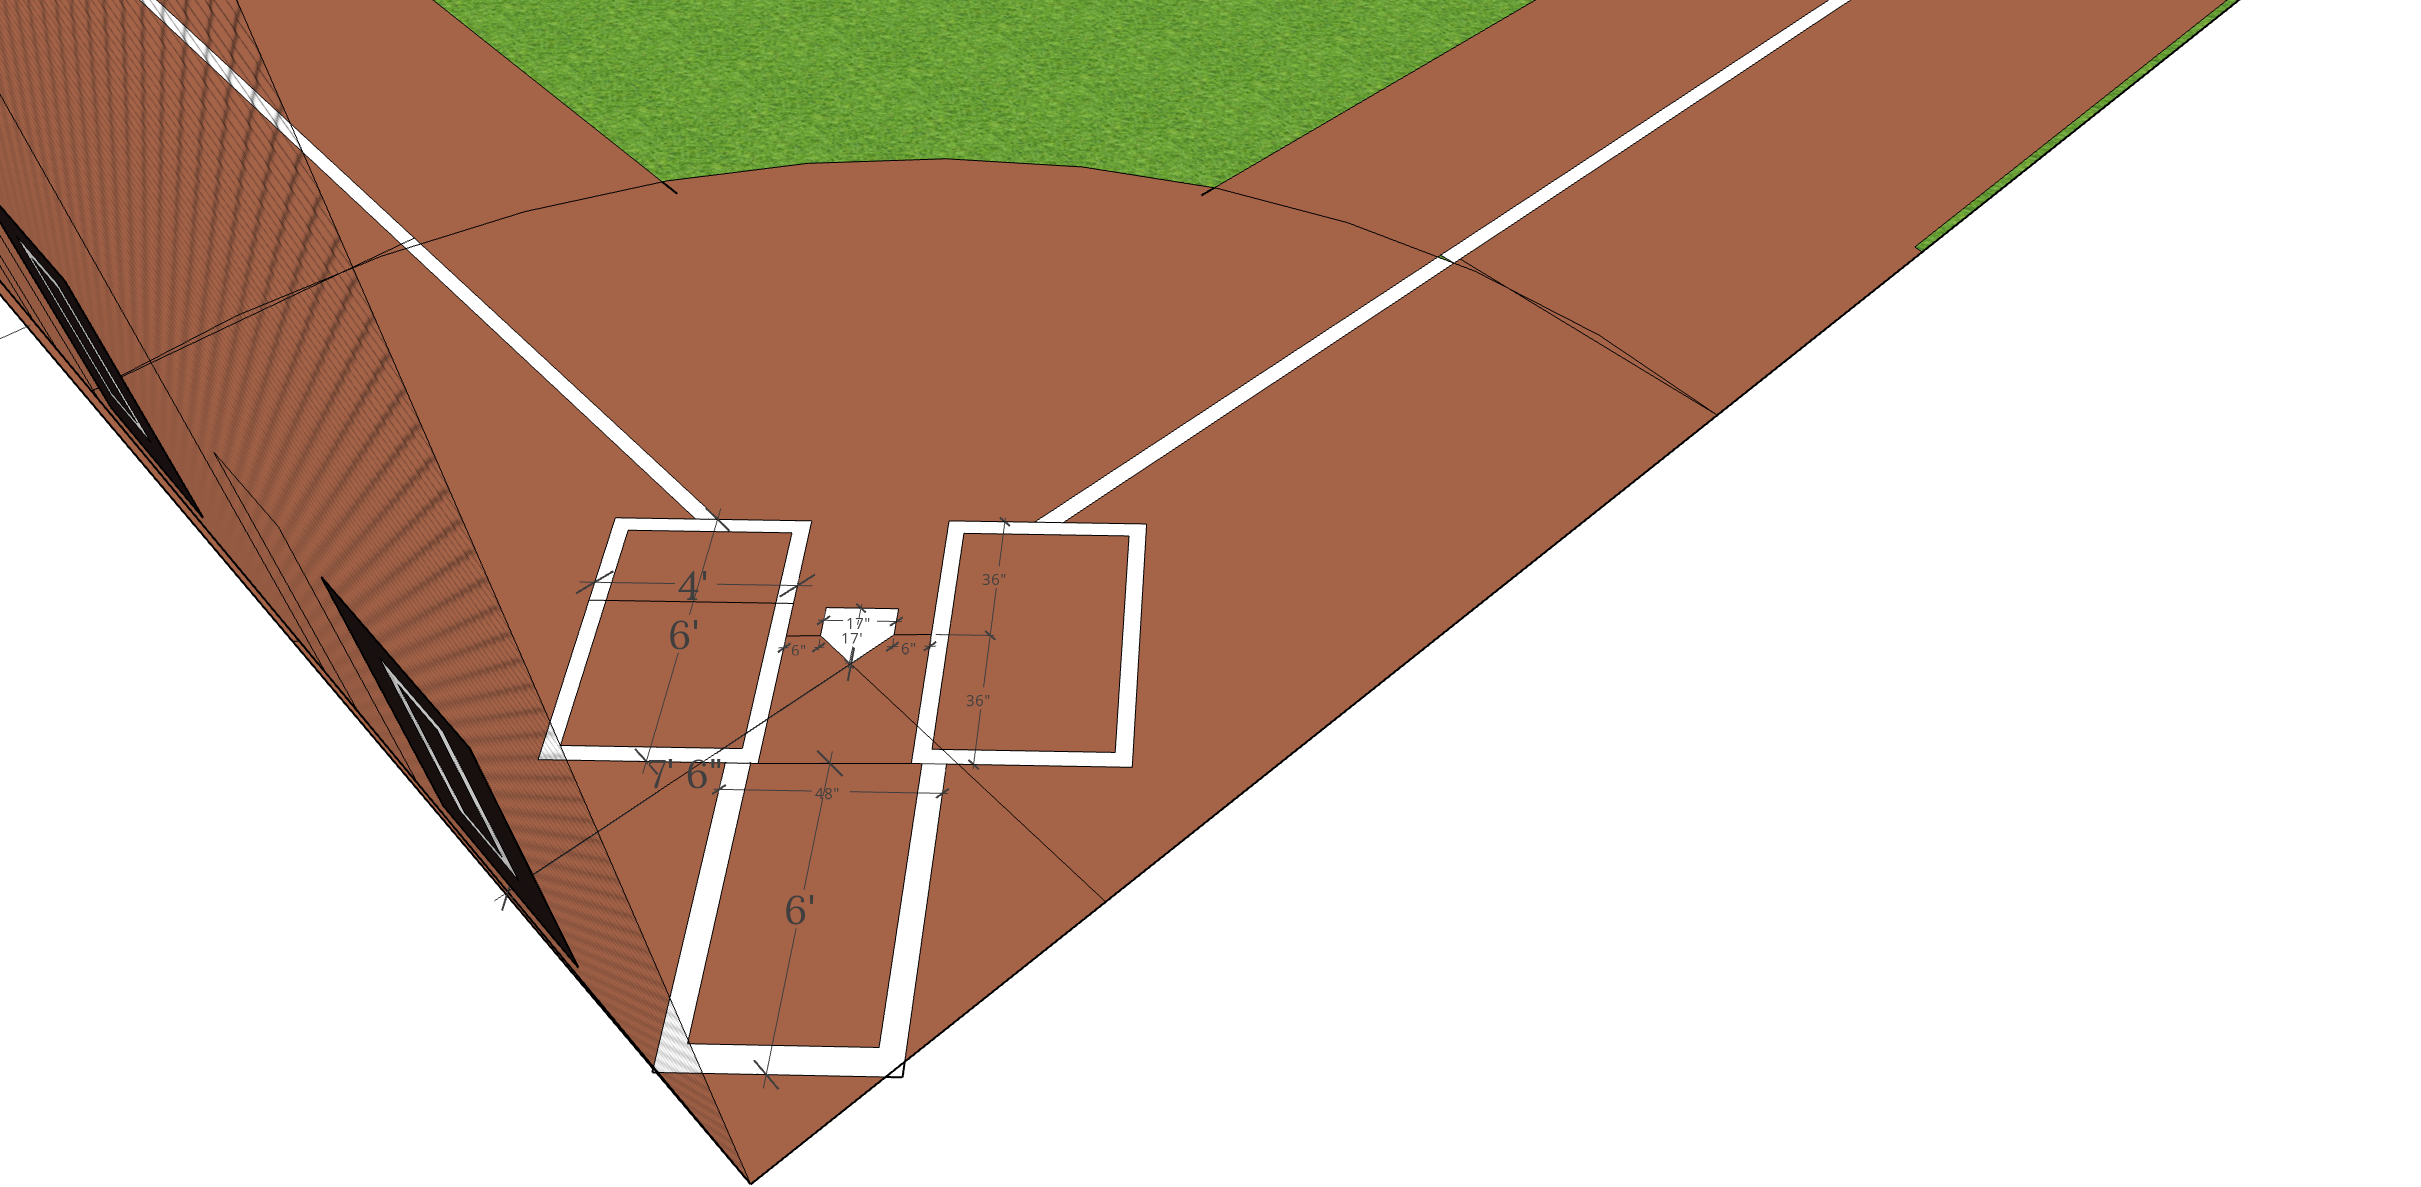 Regulation Baseball Batters Box Dimensions